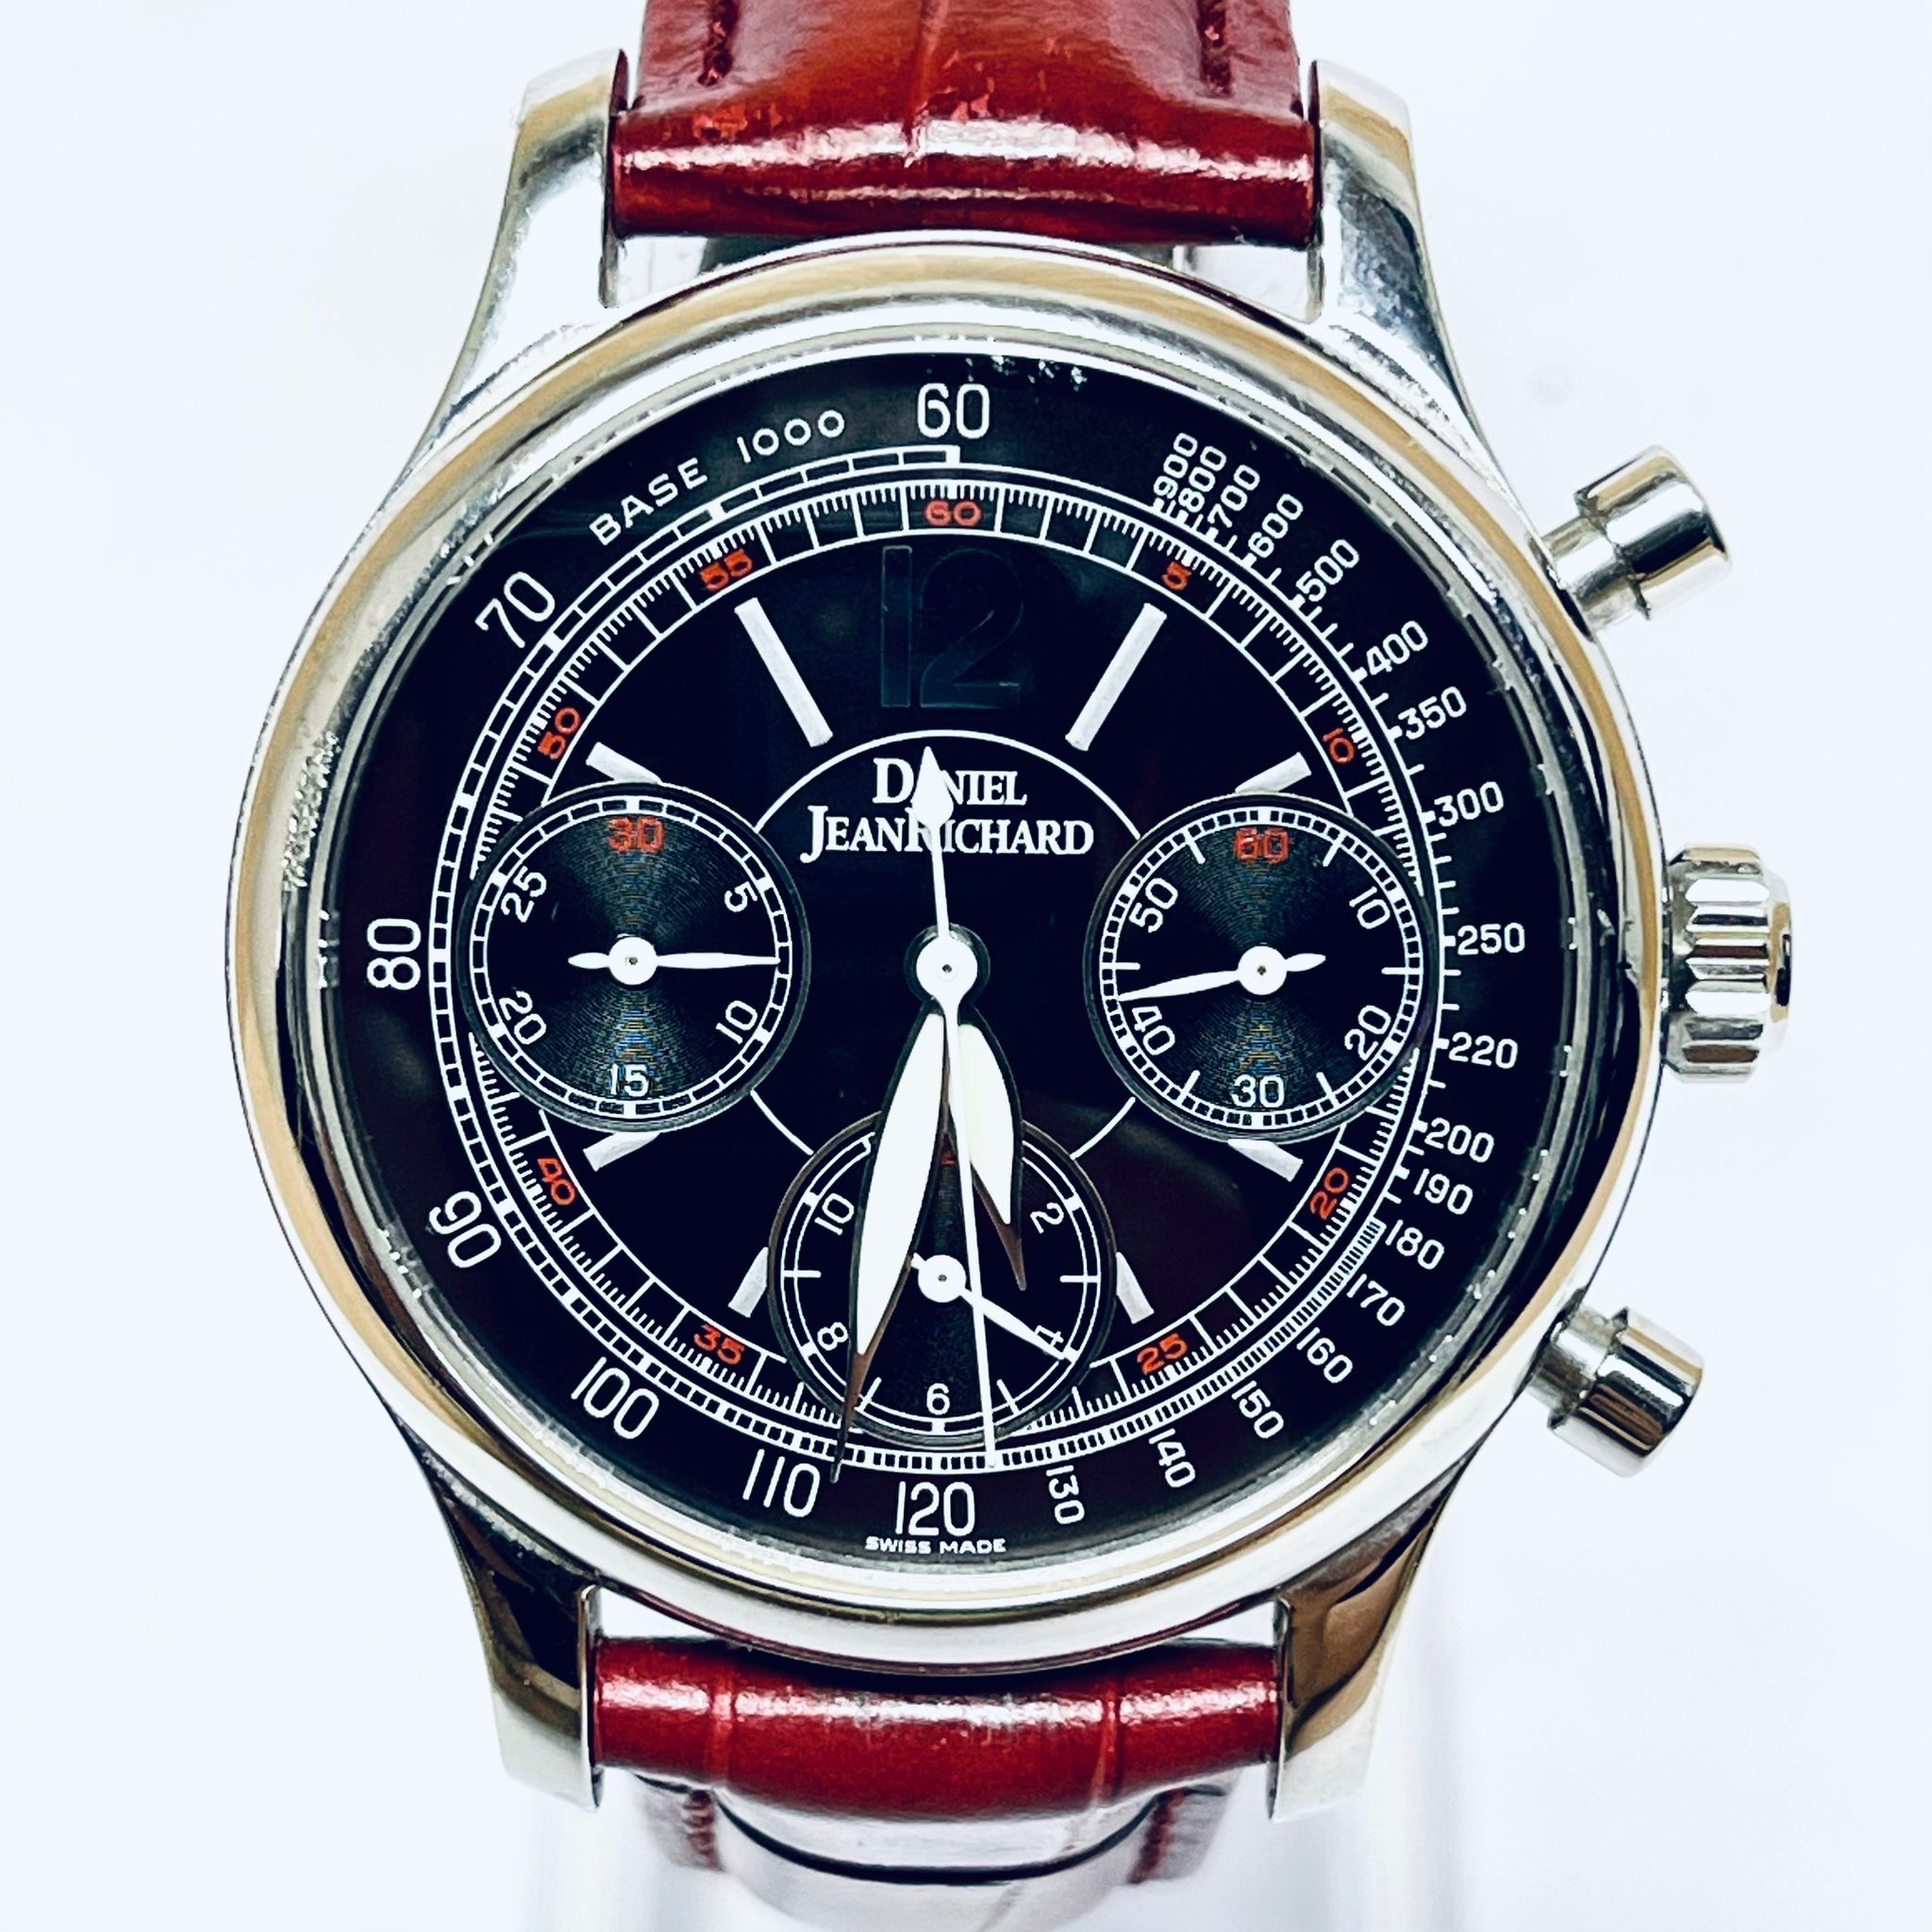 Daniel JeanRichard Bressel Chronograph Unisex Watch, 25042